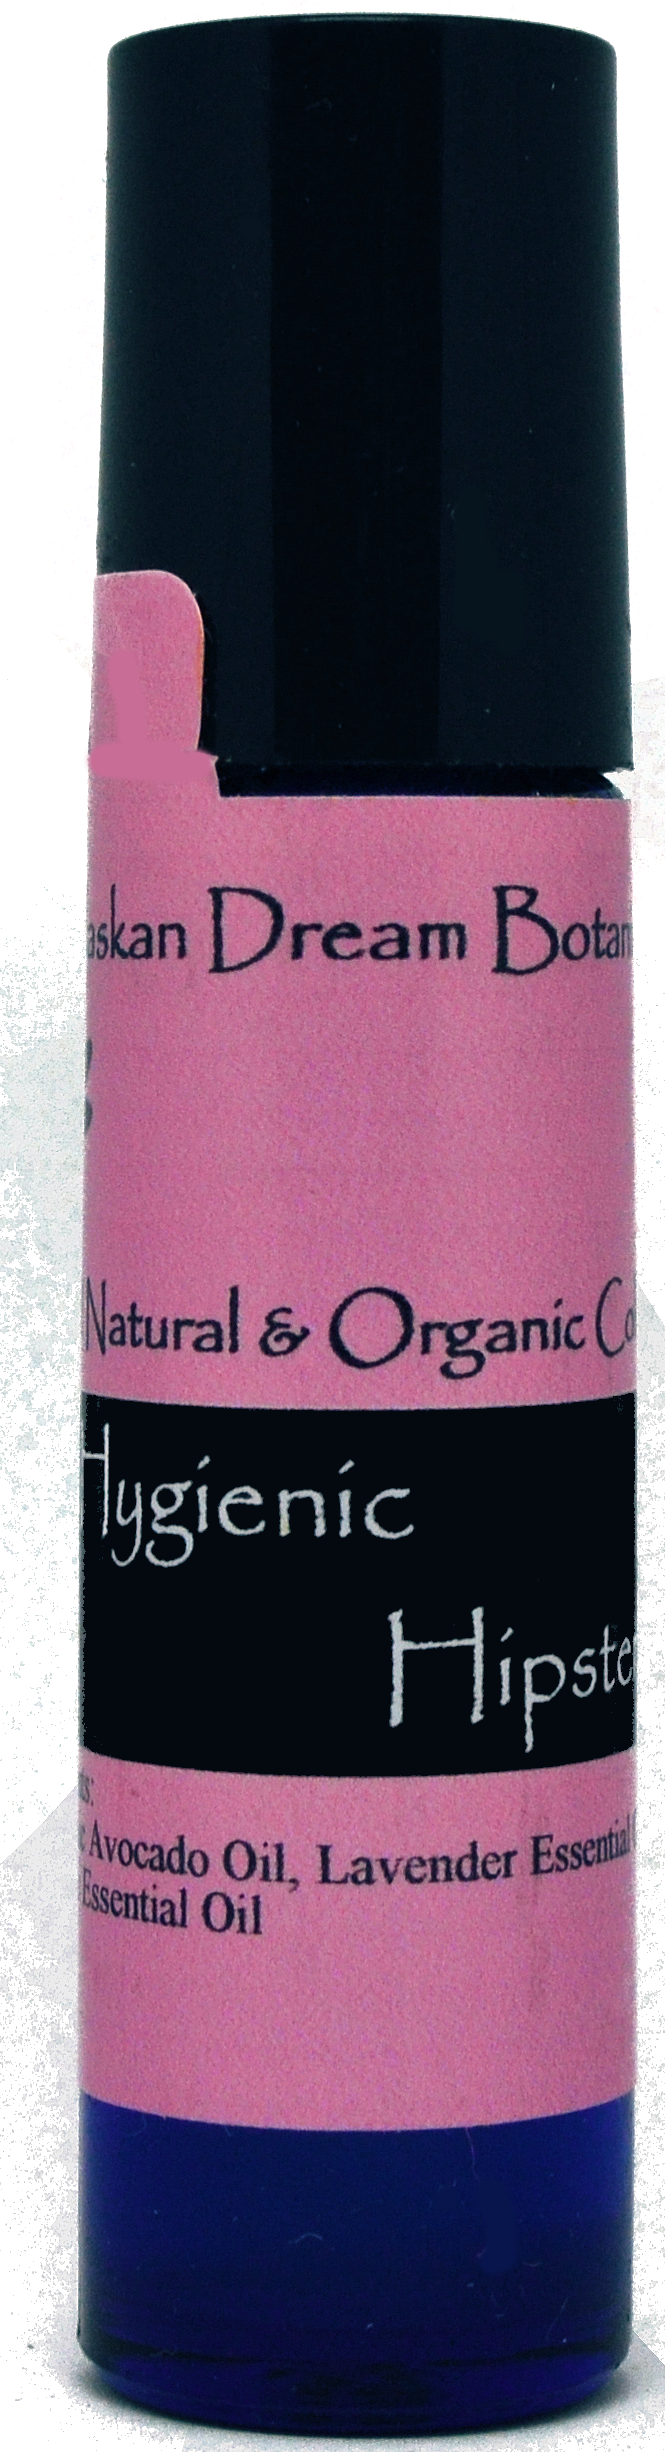 Hygienic Hipster Roll On Cologne/Perfume - Alaskan Dream Botanicals